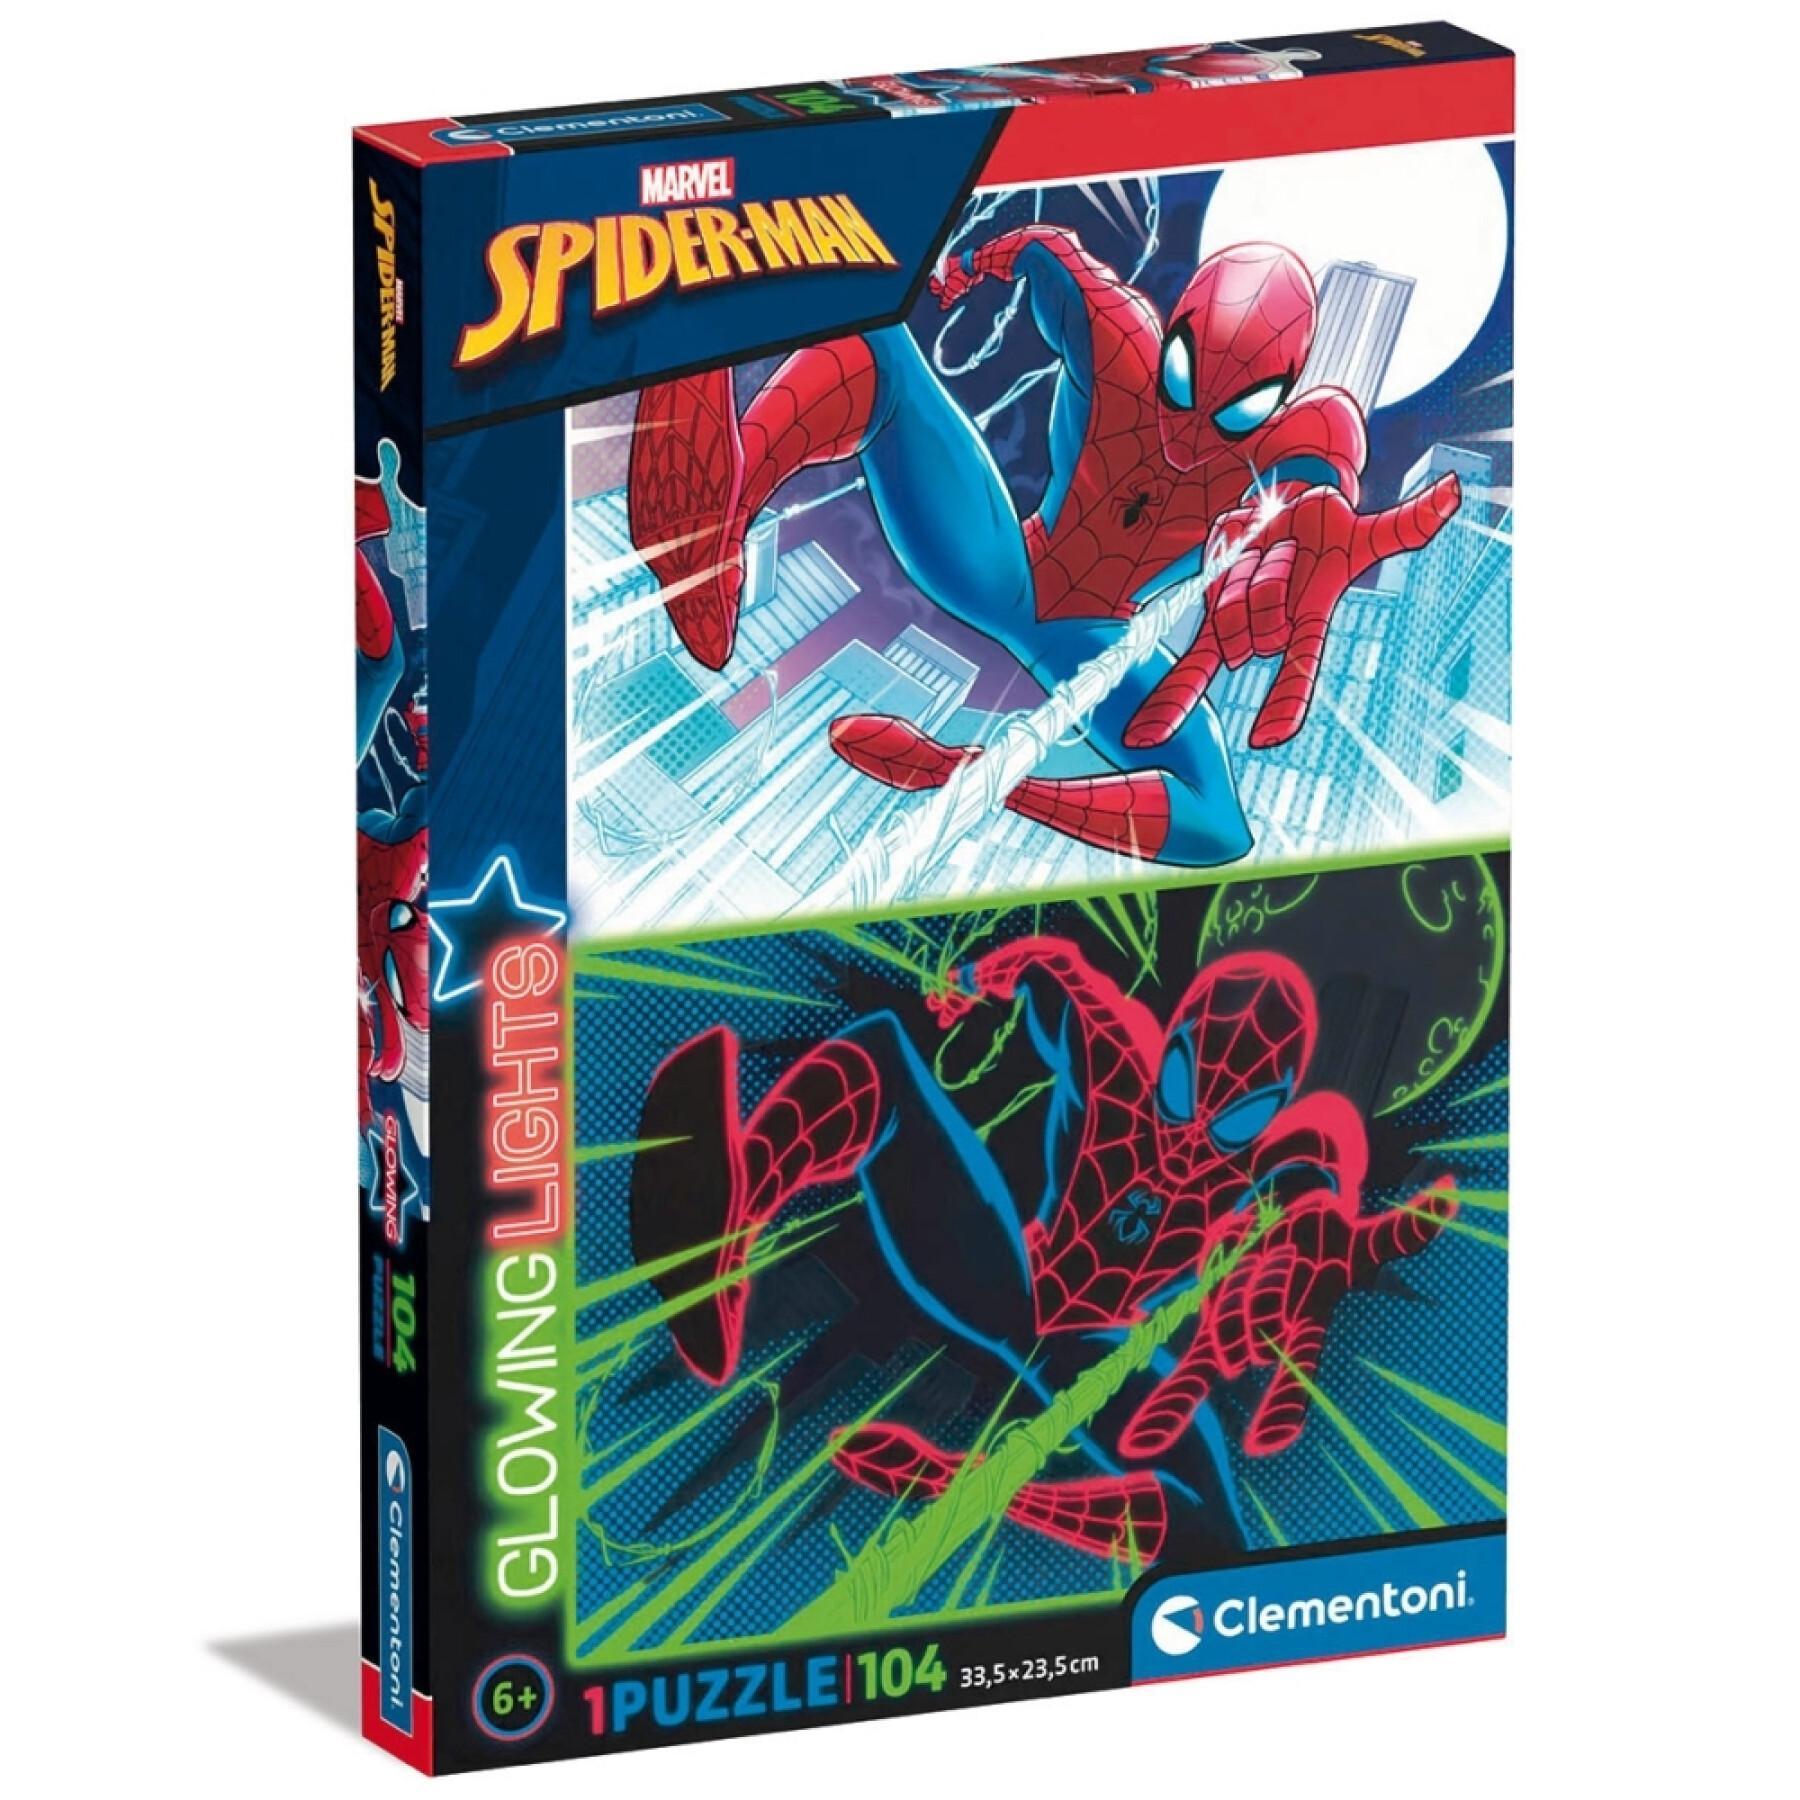 Neonpussel med 104 bitar Clementoni Spiderman